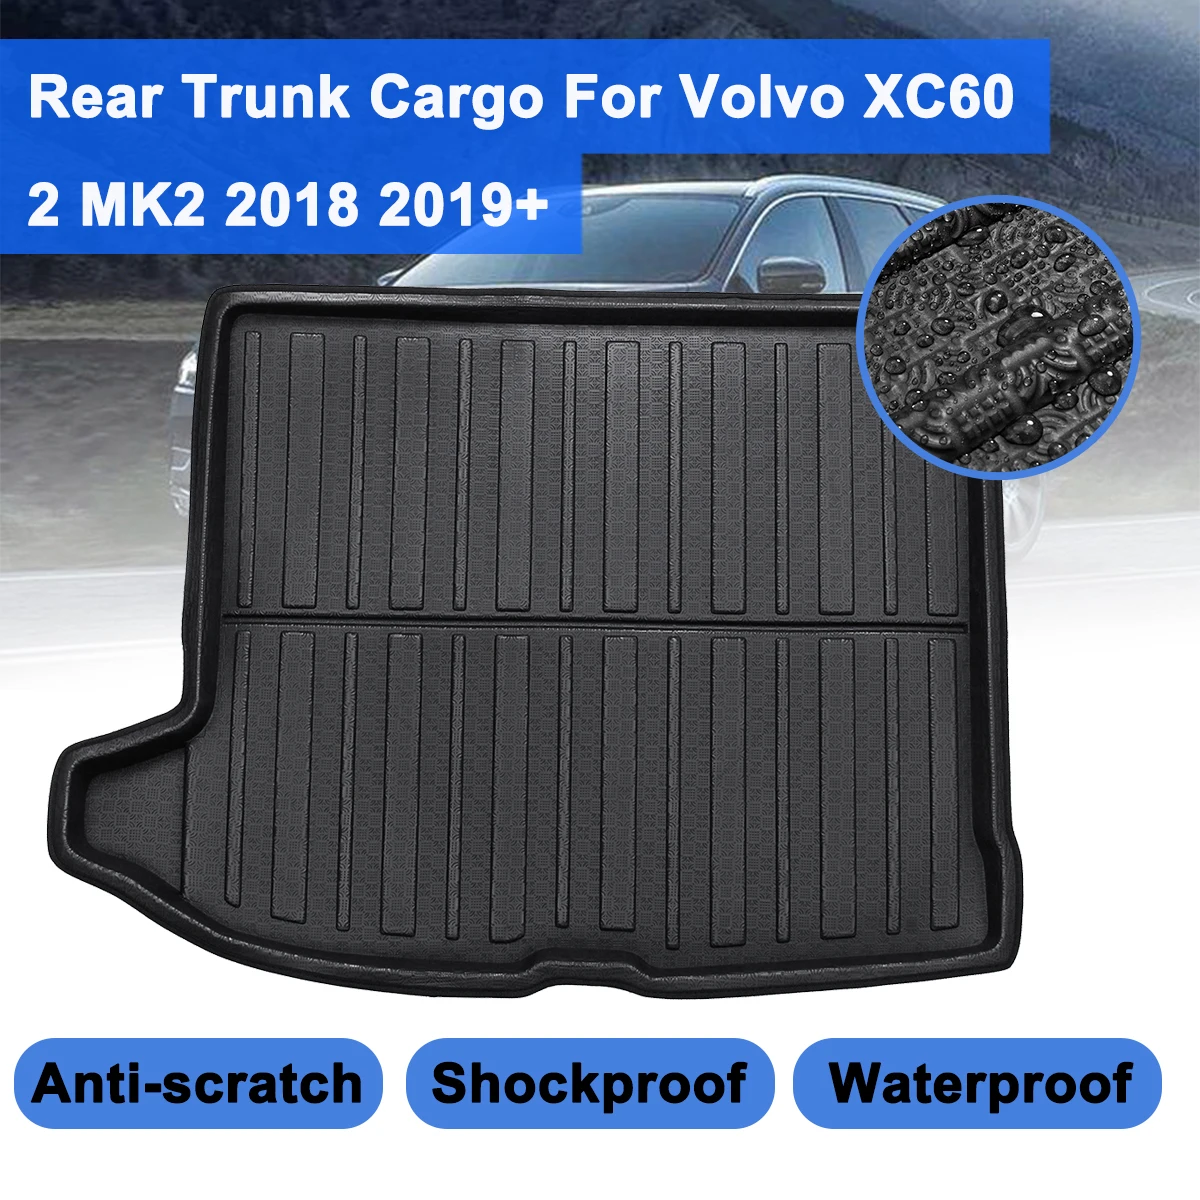 

Подкладка для багажника для Volvo XC60 2 MK2 2018 2019 + коврик для багажника заднего багажника, напольный ковер, поднос для багажа, грязезащитный водон...